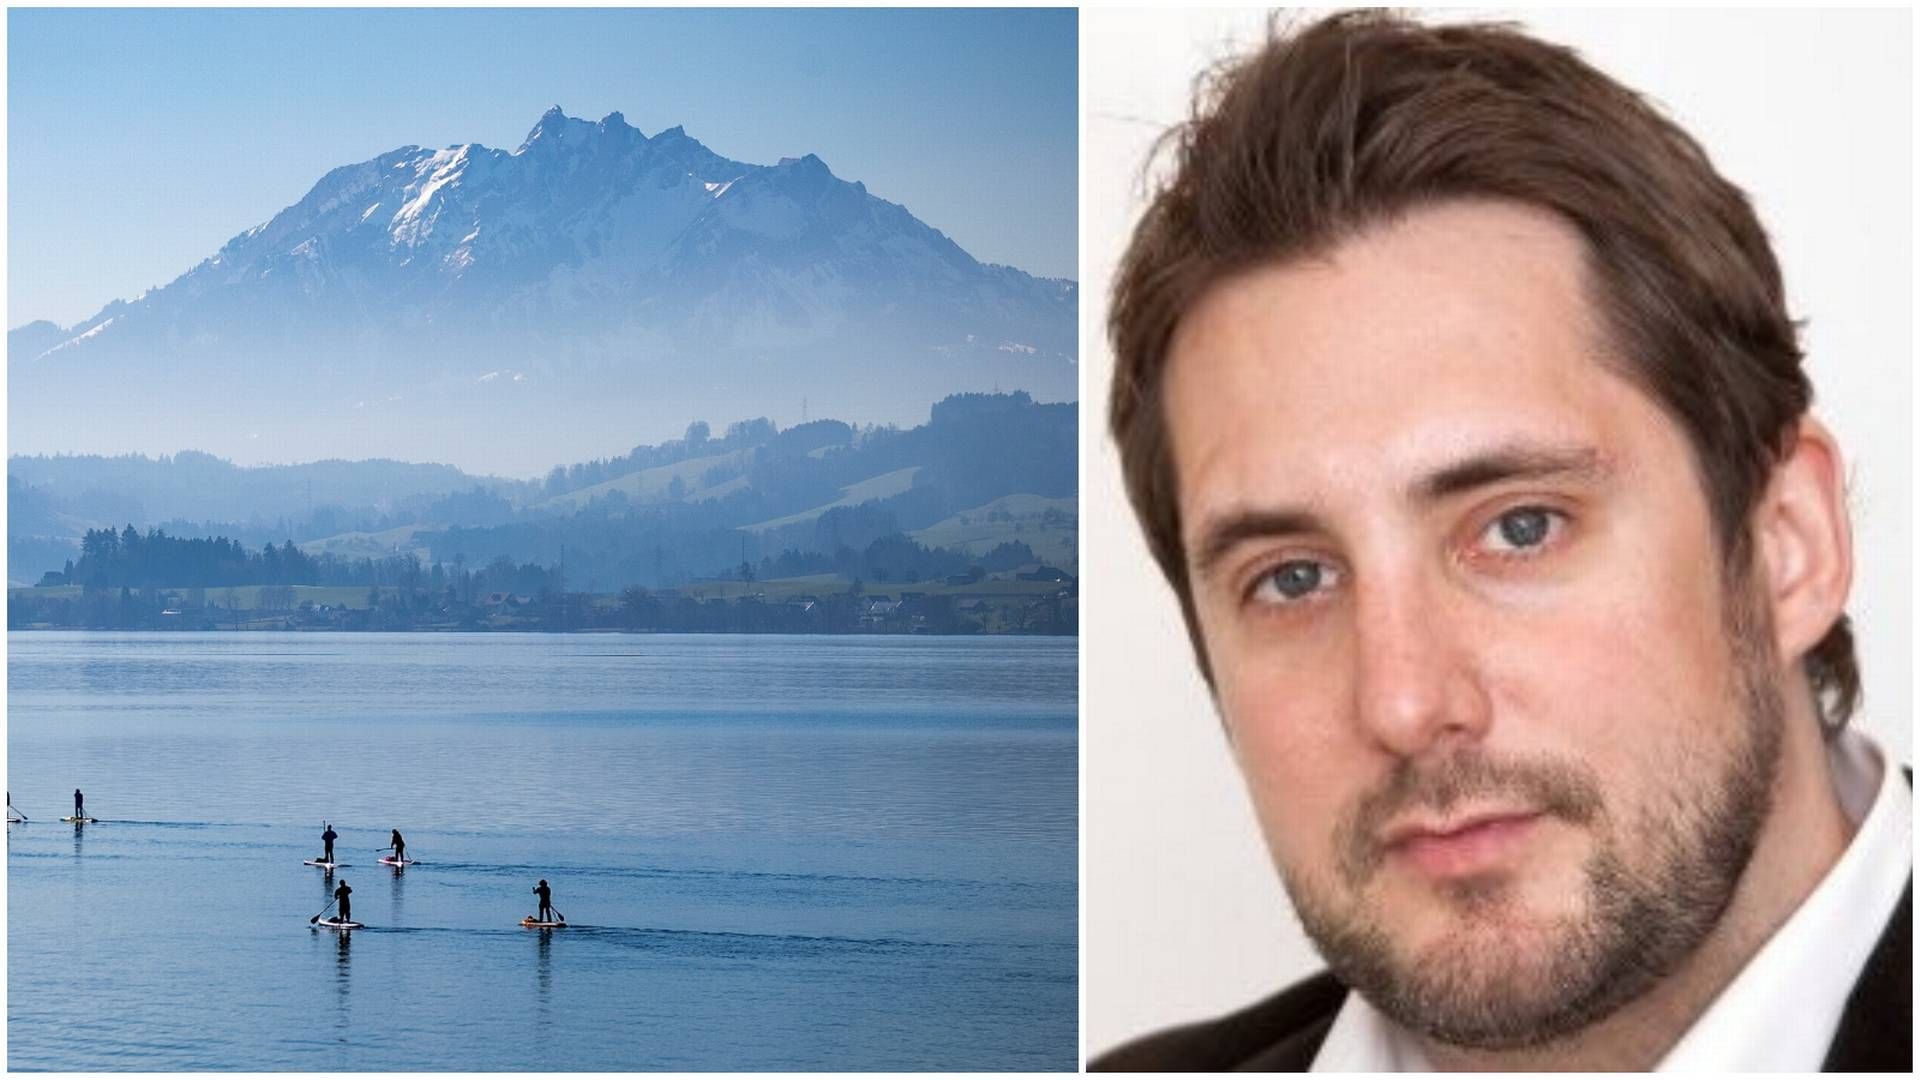 NYTT BOSTED: Gustaf Aspelin flytter til Sveits og Zug-regionen, hvor denne sjøen ligger. | Foto: Alexandra Wey/Keystone via AP og LinkedIn. Collage: EiendomsWatch